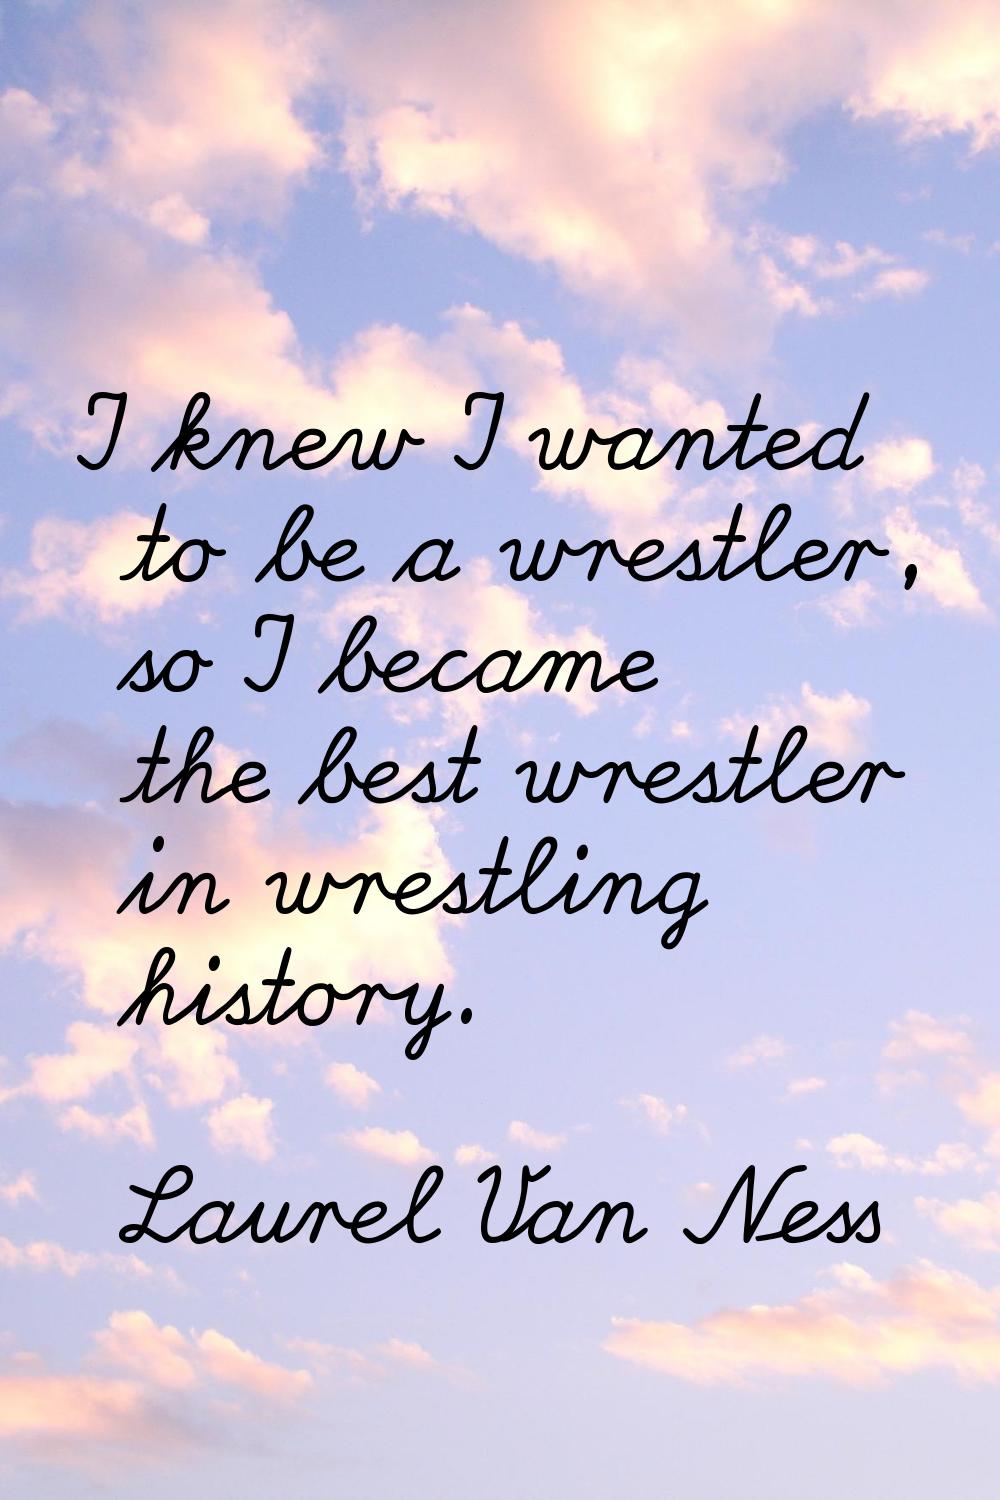 I knew I wanted to be a wrestler, so I became the best wrestler in wrestling history.